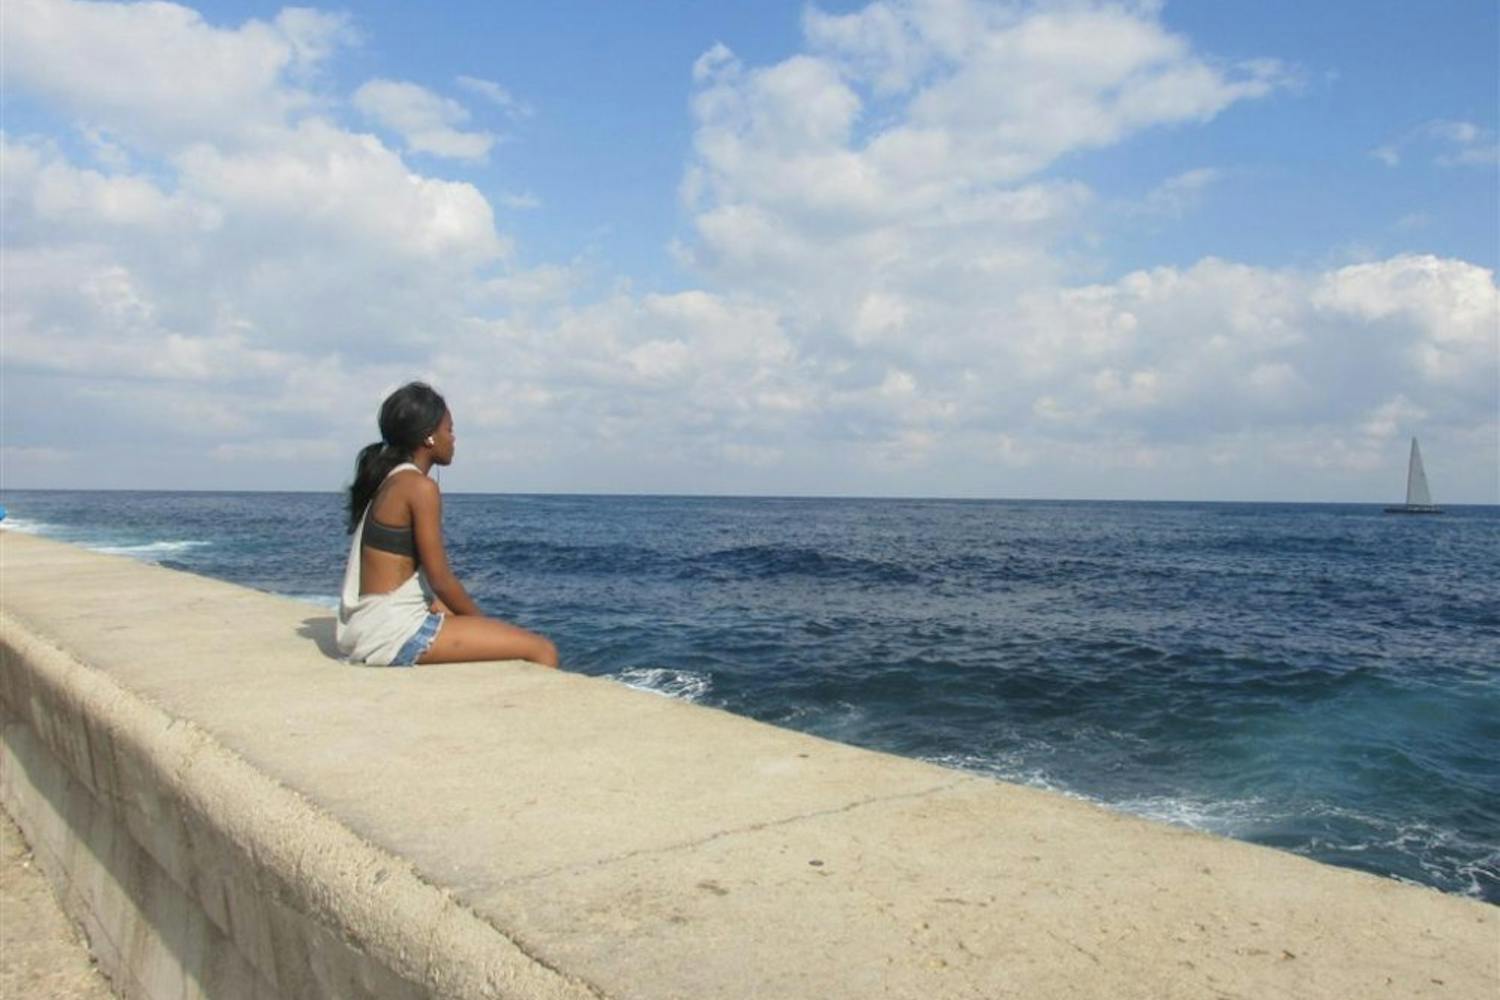 Paula Cullison's photo "Looking to the Future" features a girl sitting&nbsp;on the Malecón&nbsp;on the&nbsp;coast of Havana, Cuba&nbsp;on Feb. 7, 2016. The&nbsp;art exhibit at the Fletcher Library runs through Dec. 3.&nbsp;